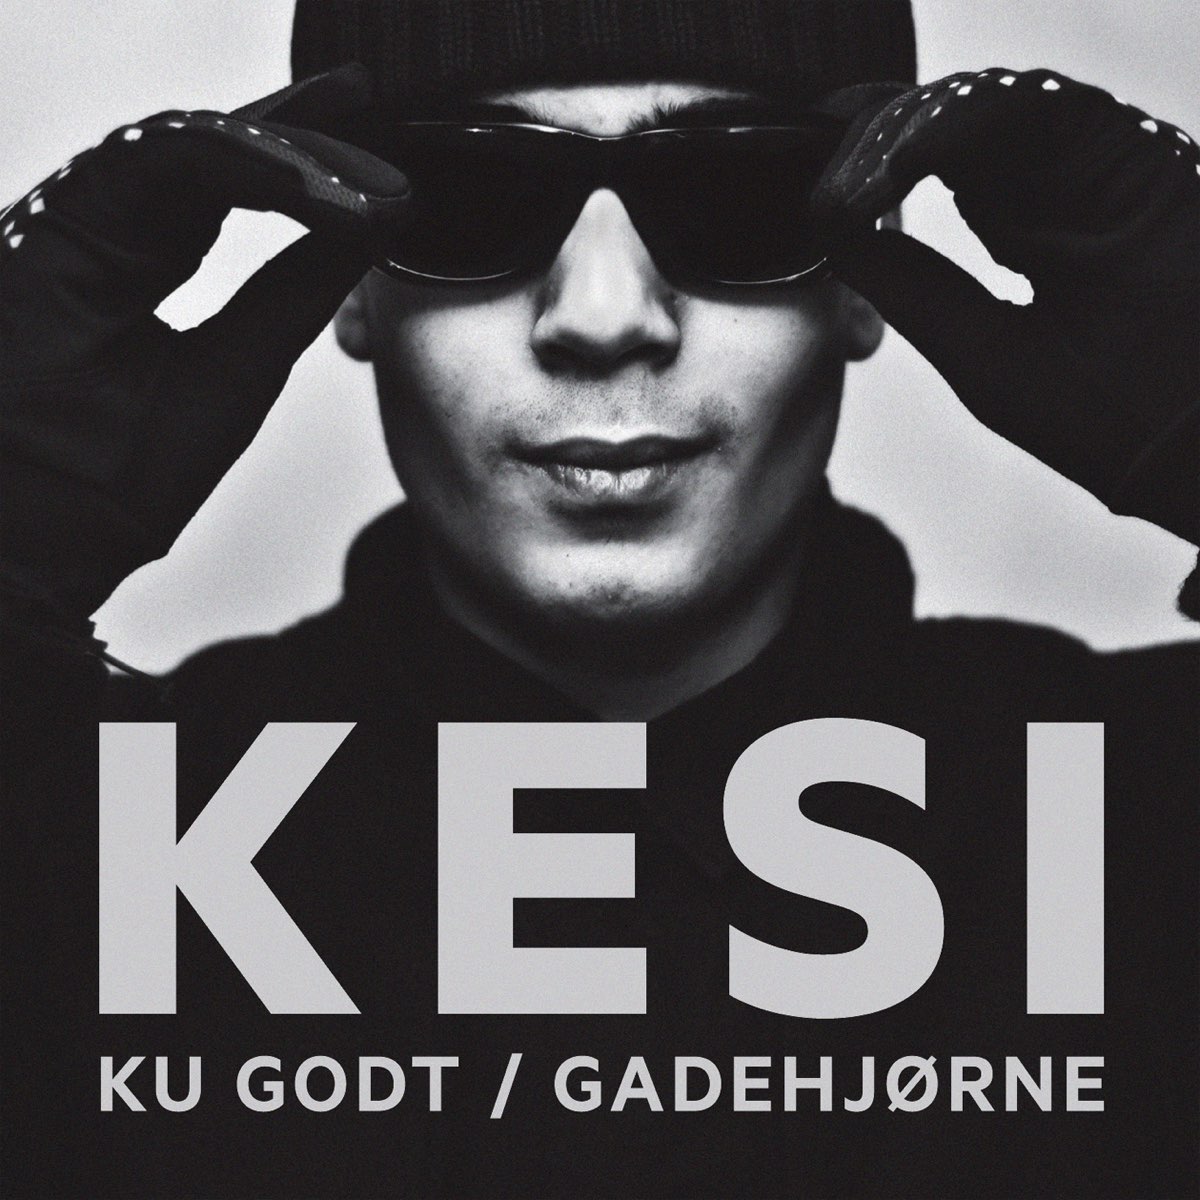 Ku / Gadehjørne Gilli & Mass Ebdrup) - Single by Kesi on Apple Music